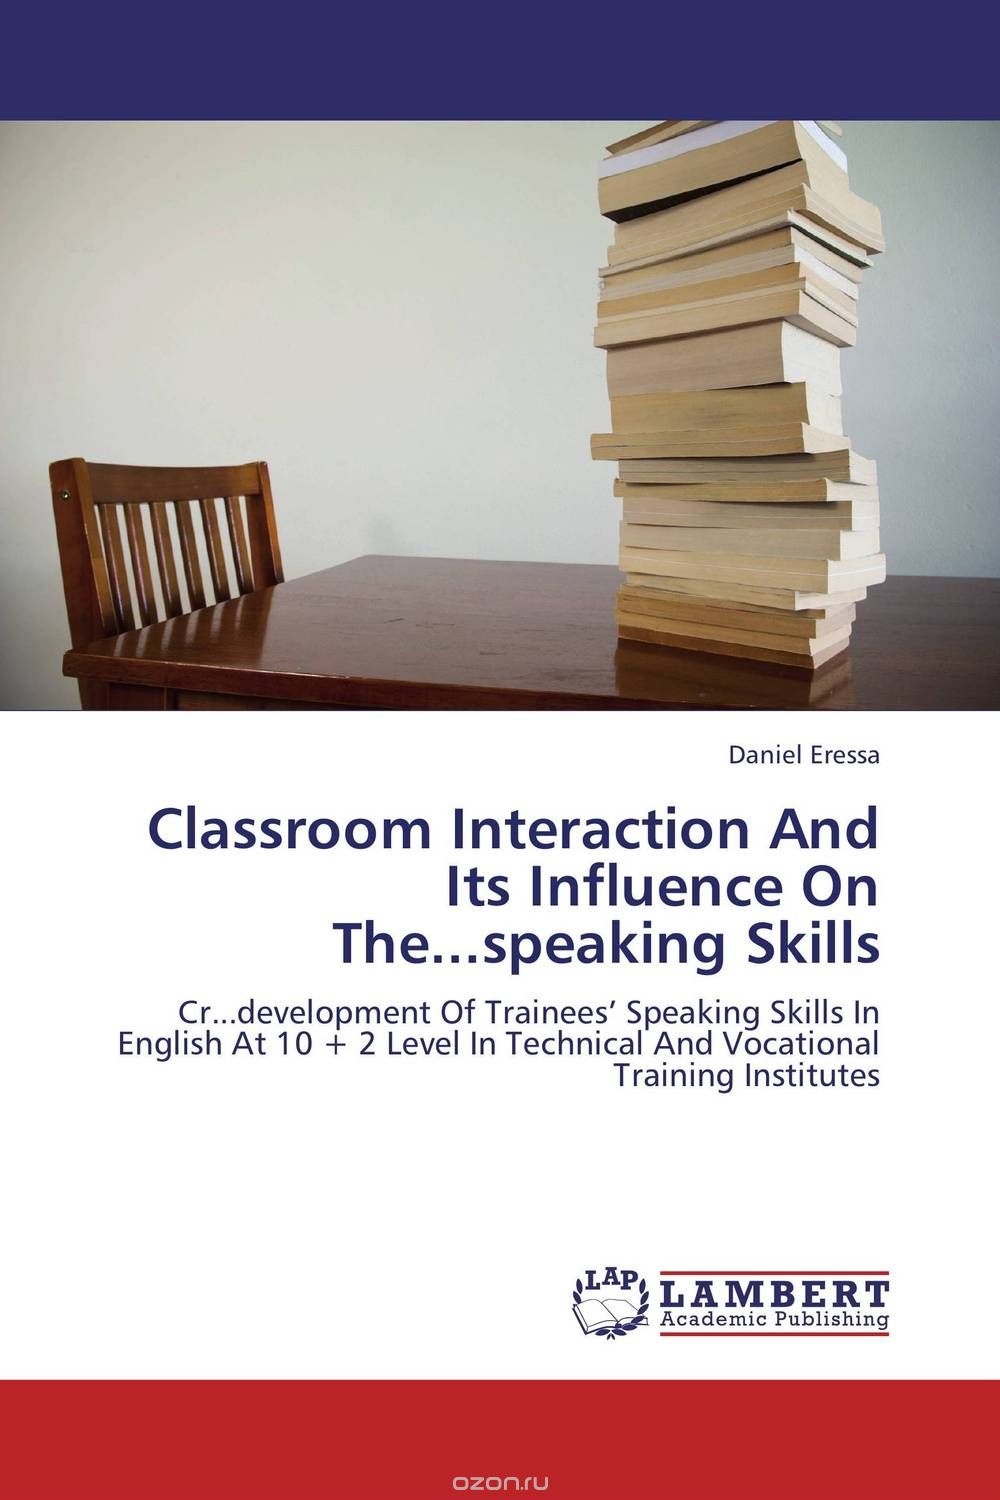 Скачать книгу "Classroom Interaction And Its Influence On The...speaking Skills"